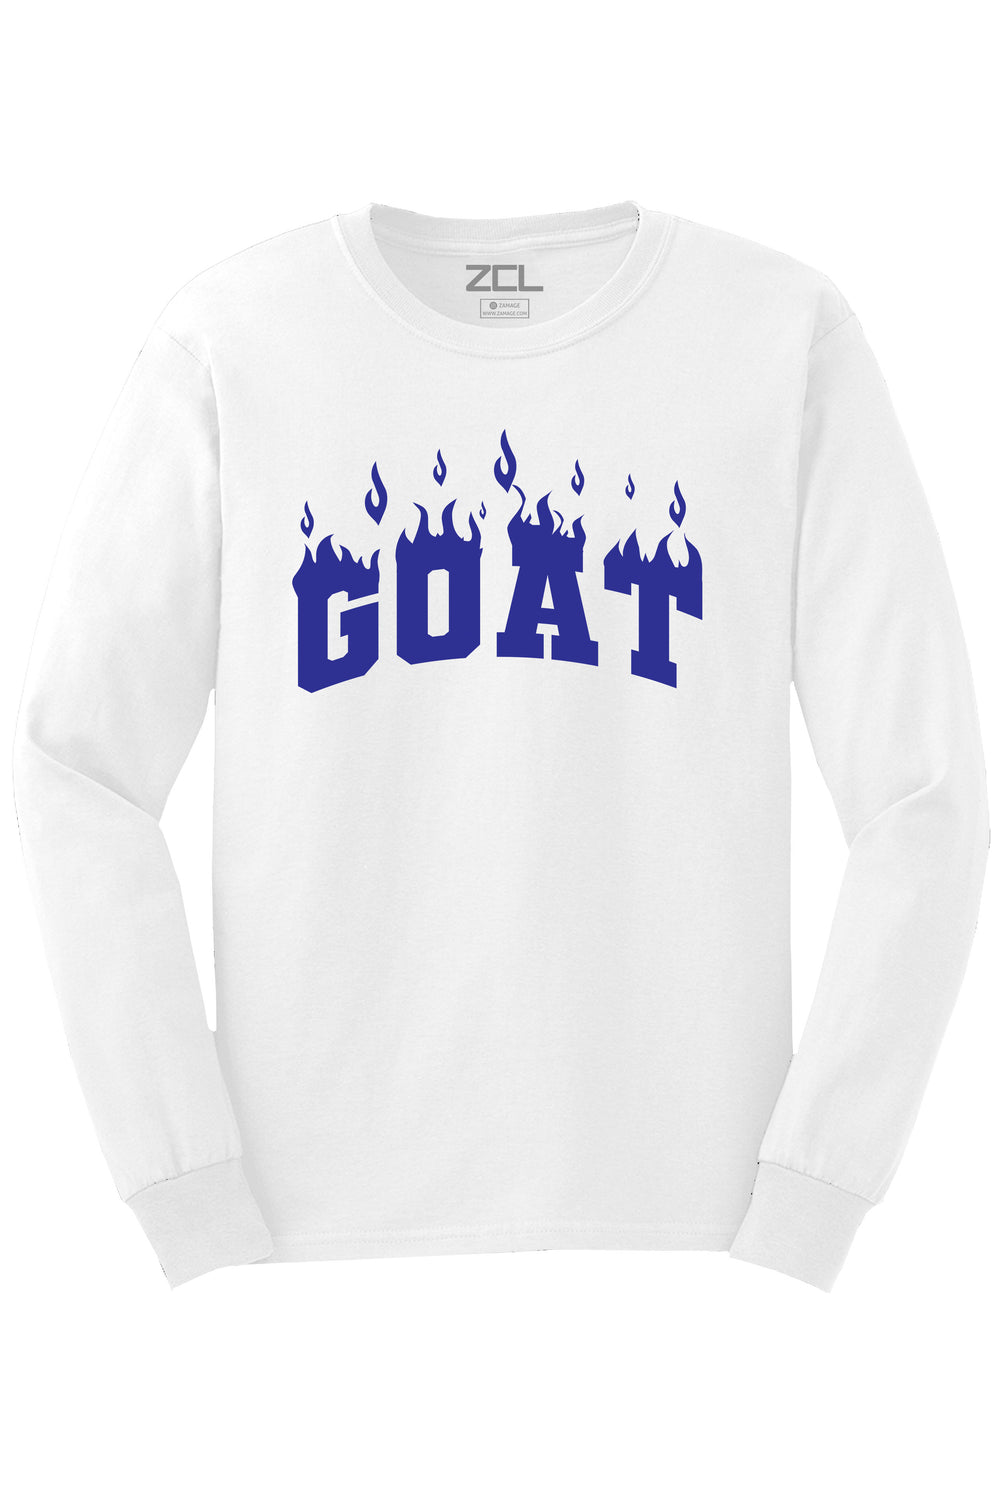 Goat Flame Long Sleeve Tee (Navy Logo) - Zamage